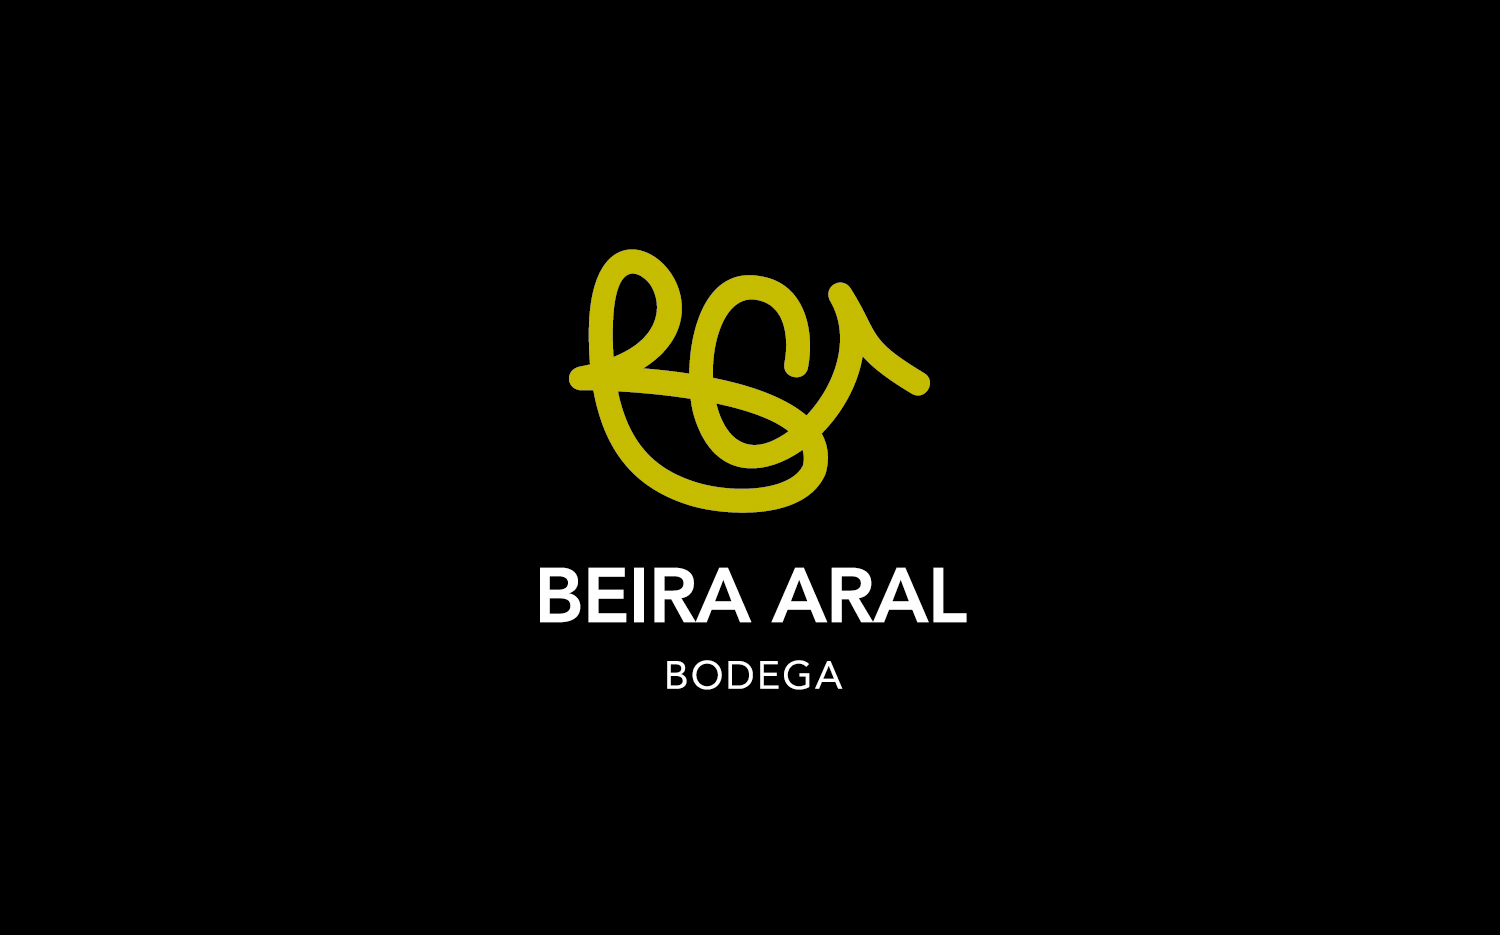 Identidad corporativa de Bodegas Beira Aral